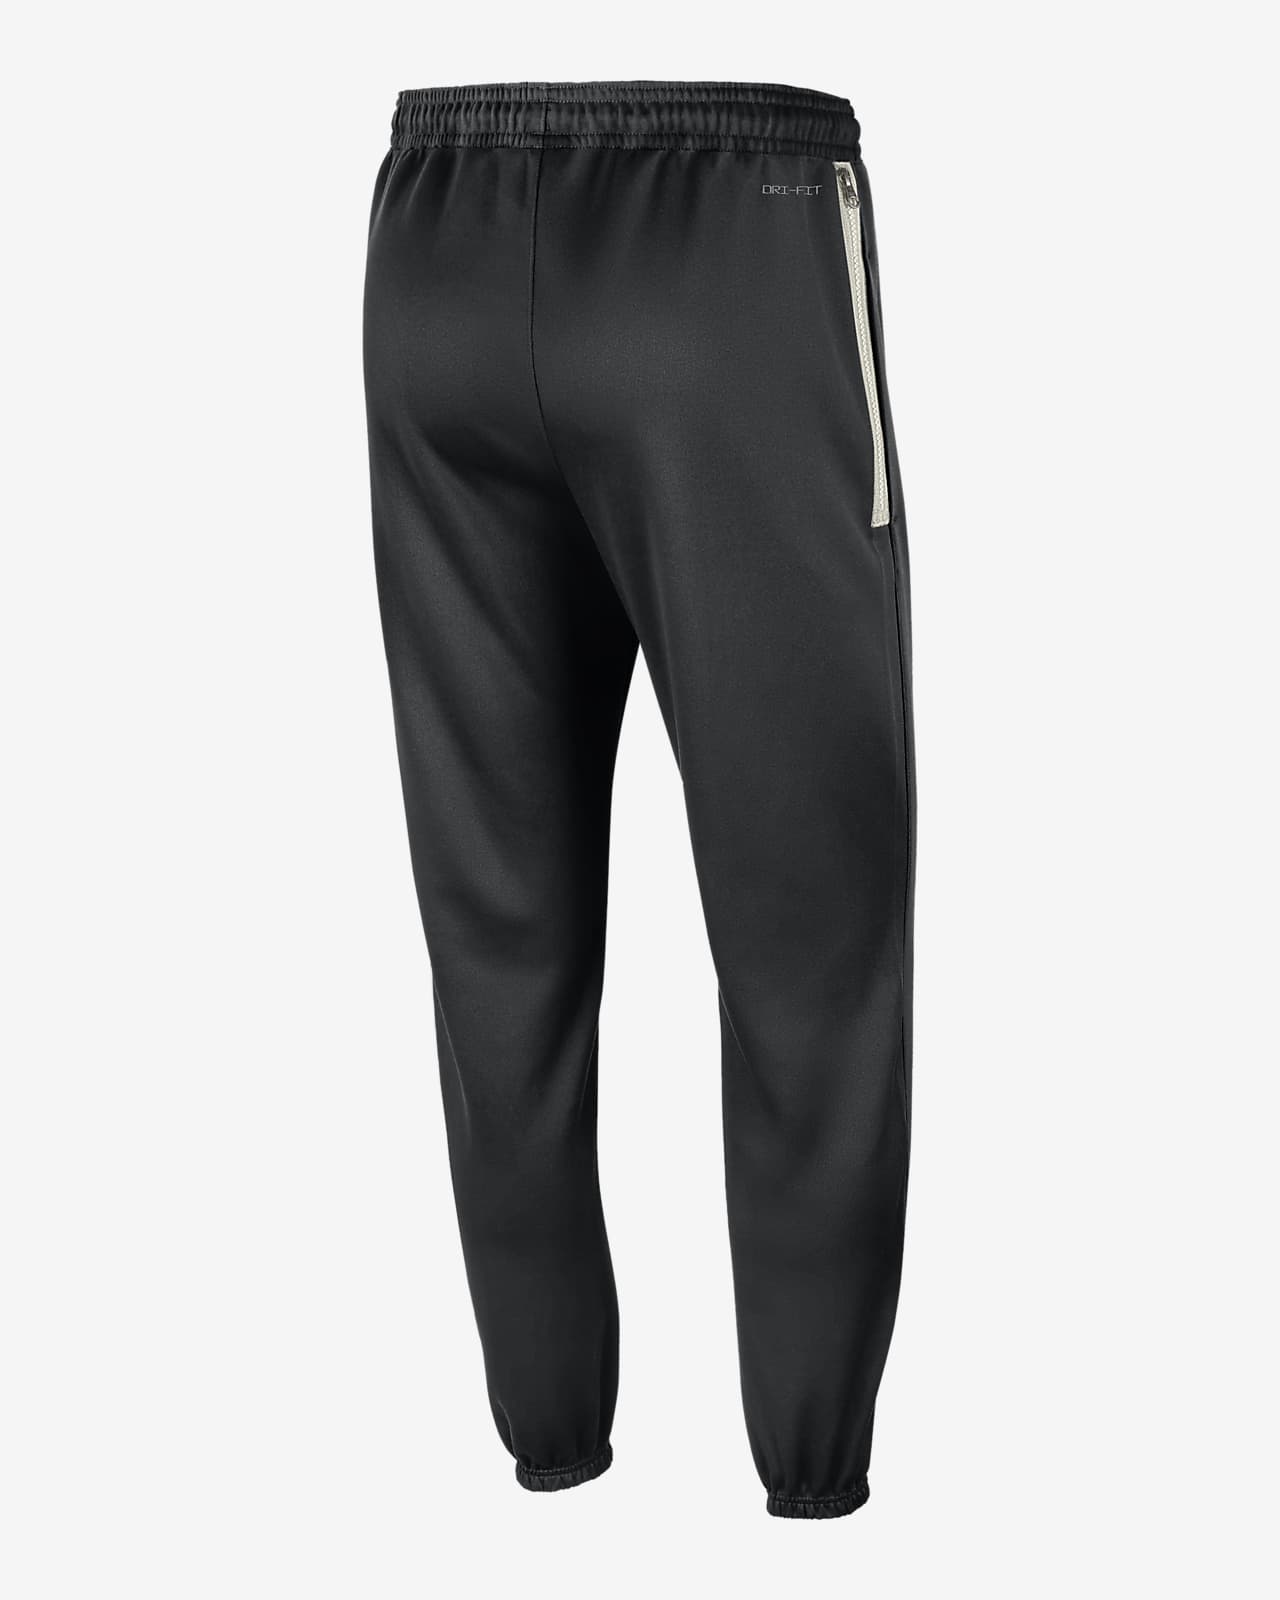 Nike NBA Authentics Compression Pants Men's Black Used XLT 811